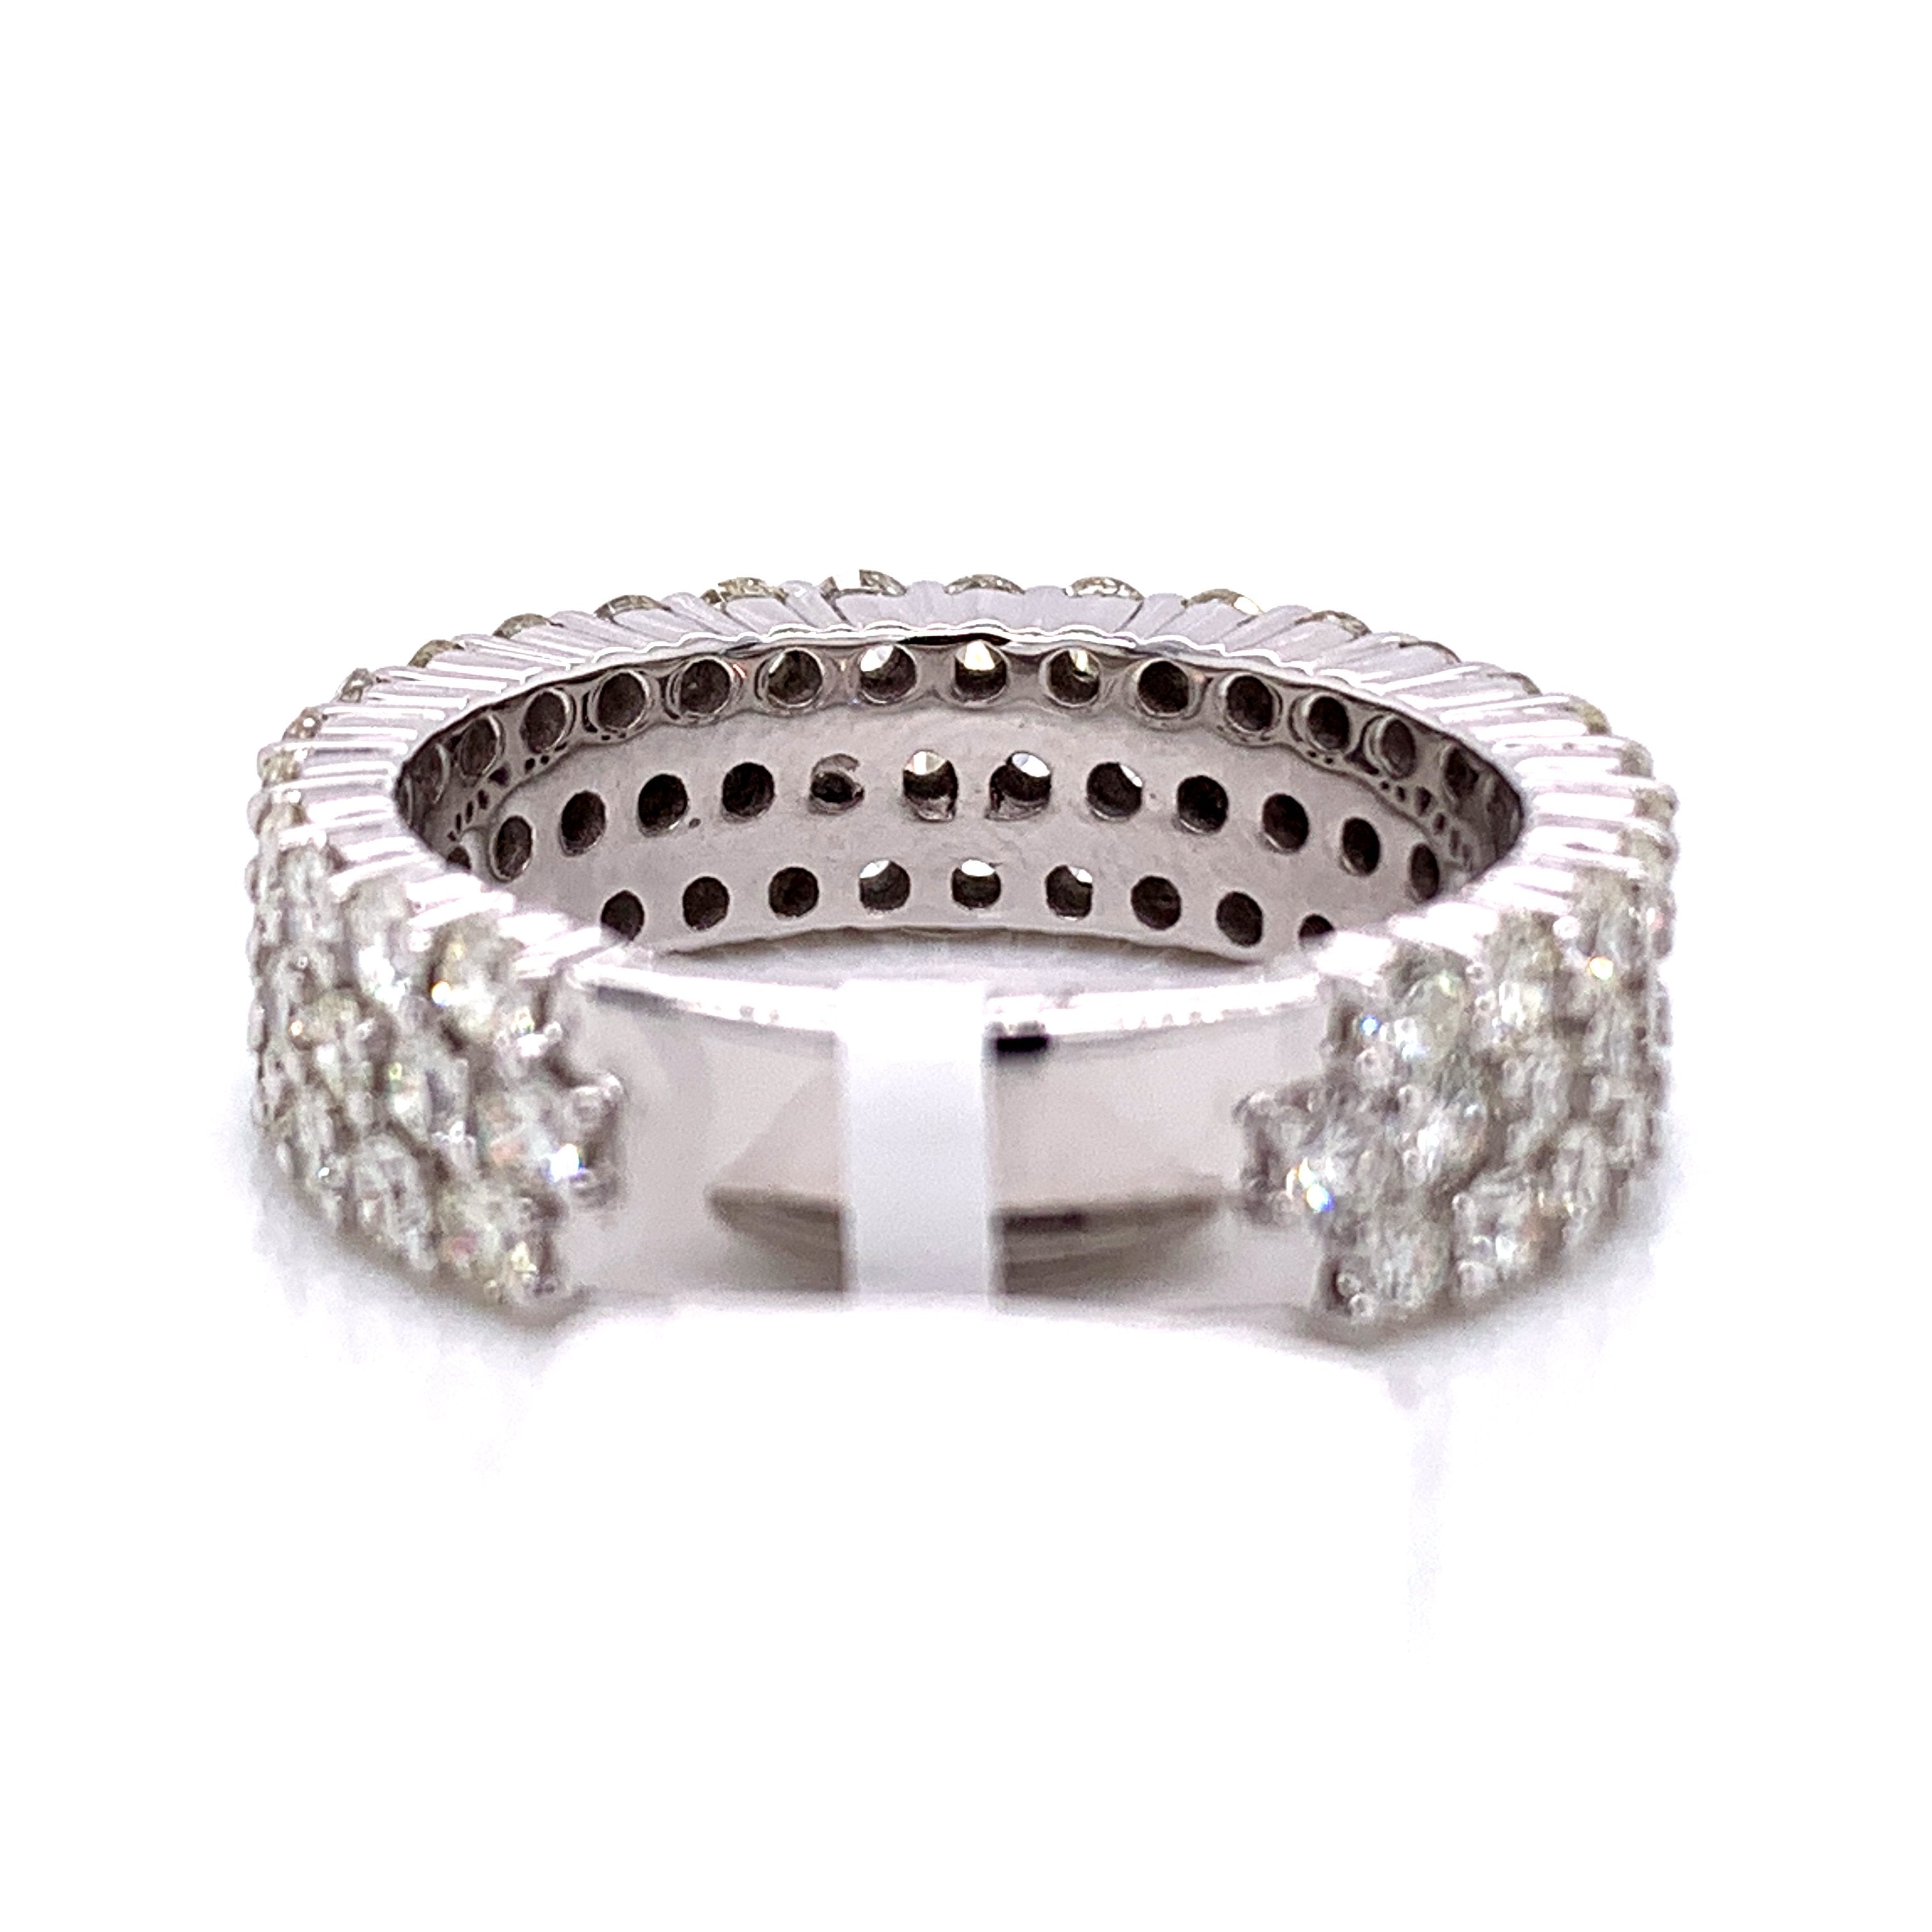 4.50 CT. Diamond Ring in 14K White Gold - White Carat Diamonds 